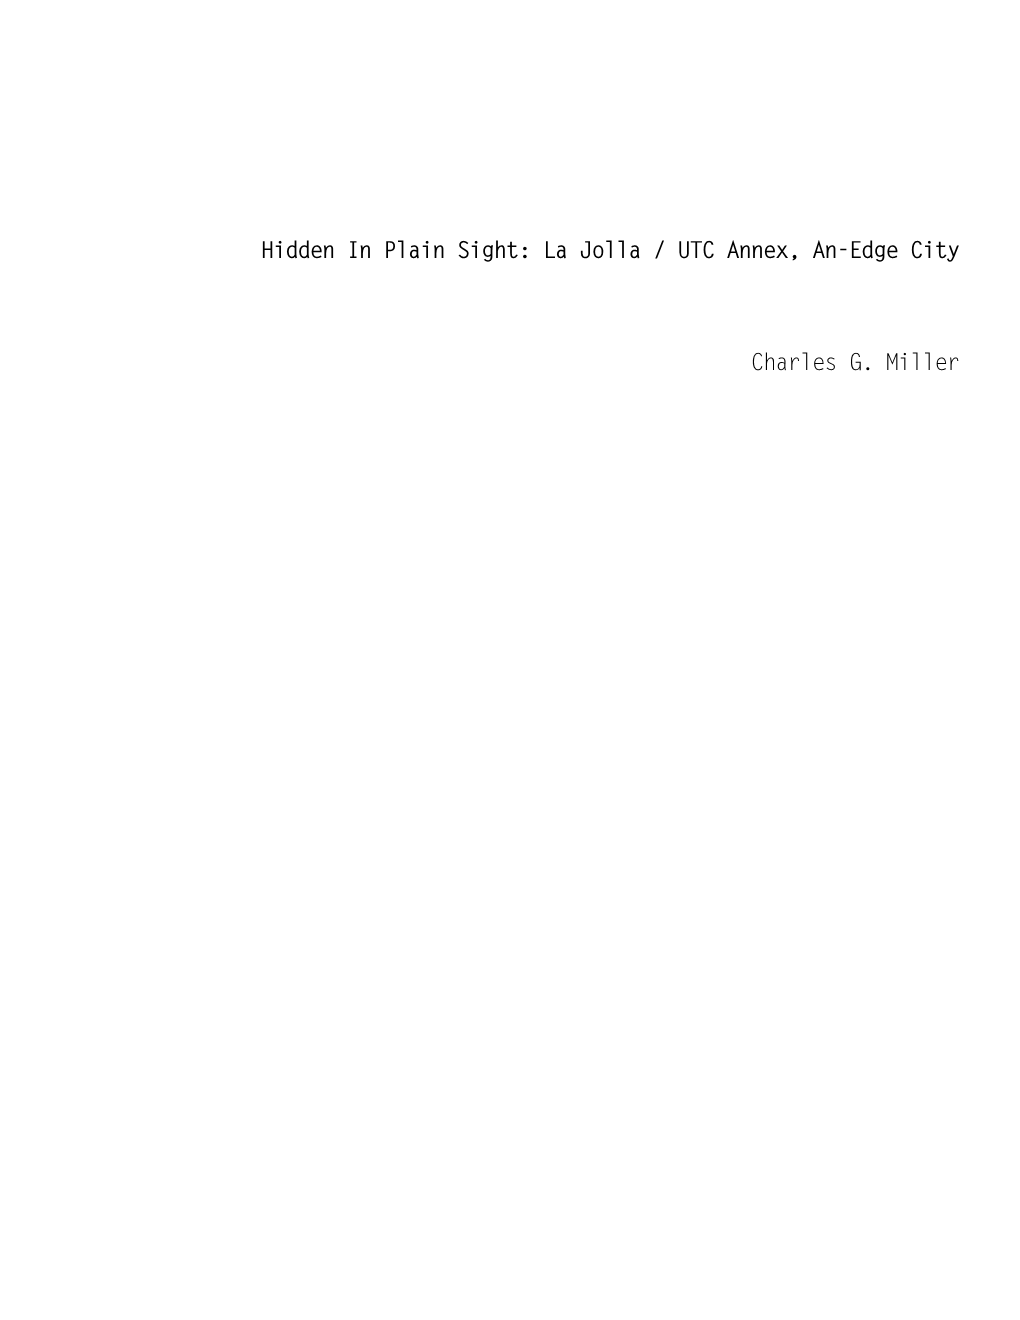 Hidden in Plain Sight: La Jolla / UTC Annex, An-Edge City Charles G. Miller